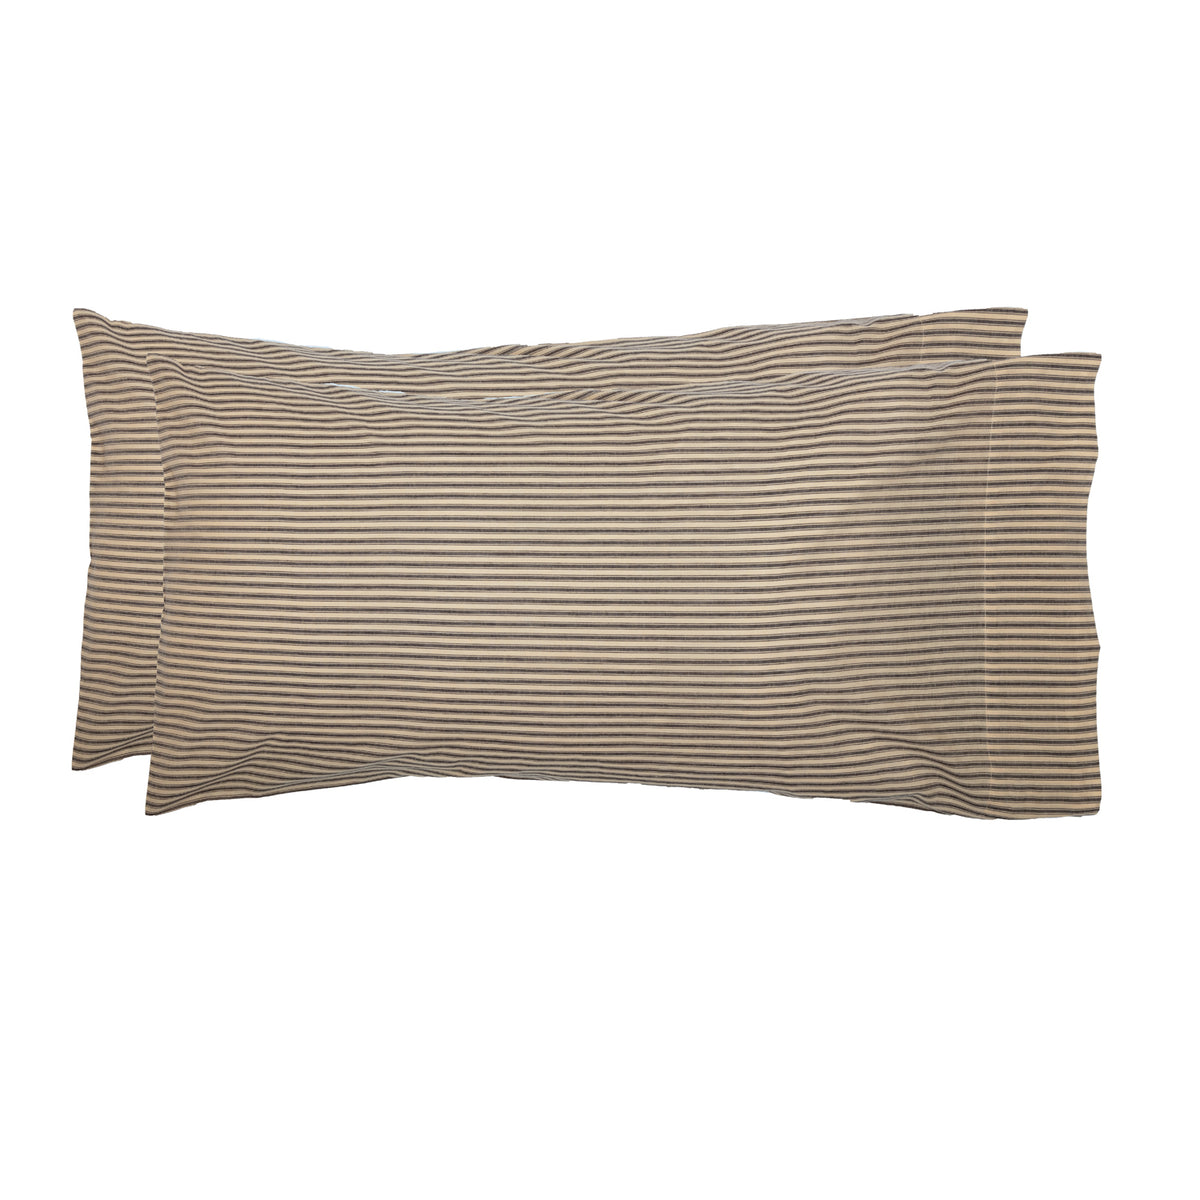 Sawyer Mill Charcoal Ticking Stripe King Pillow Case Set of 2 21x40